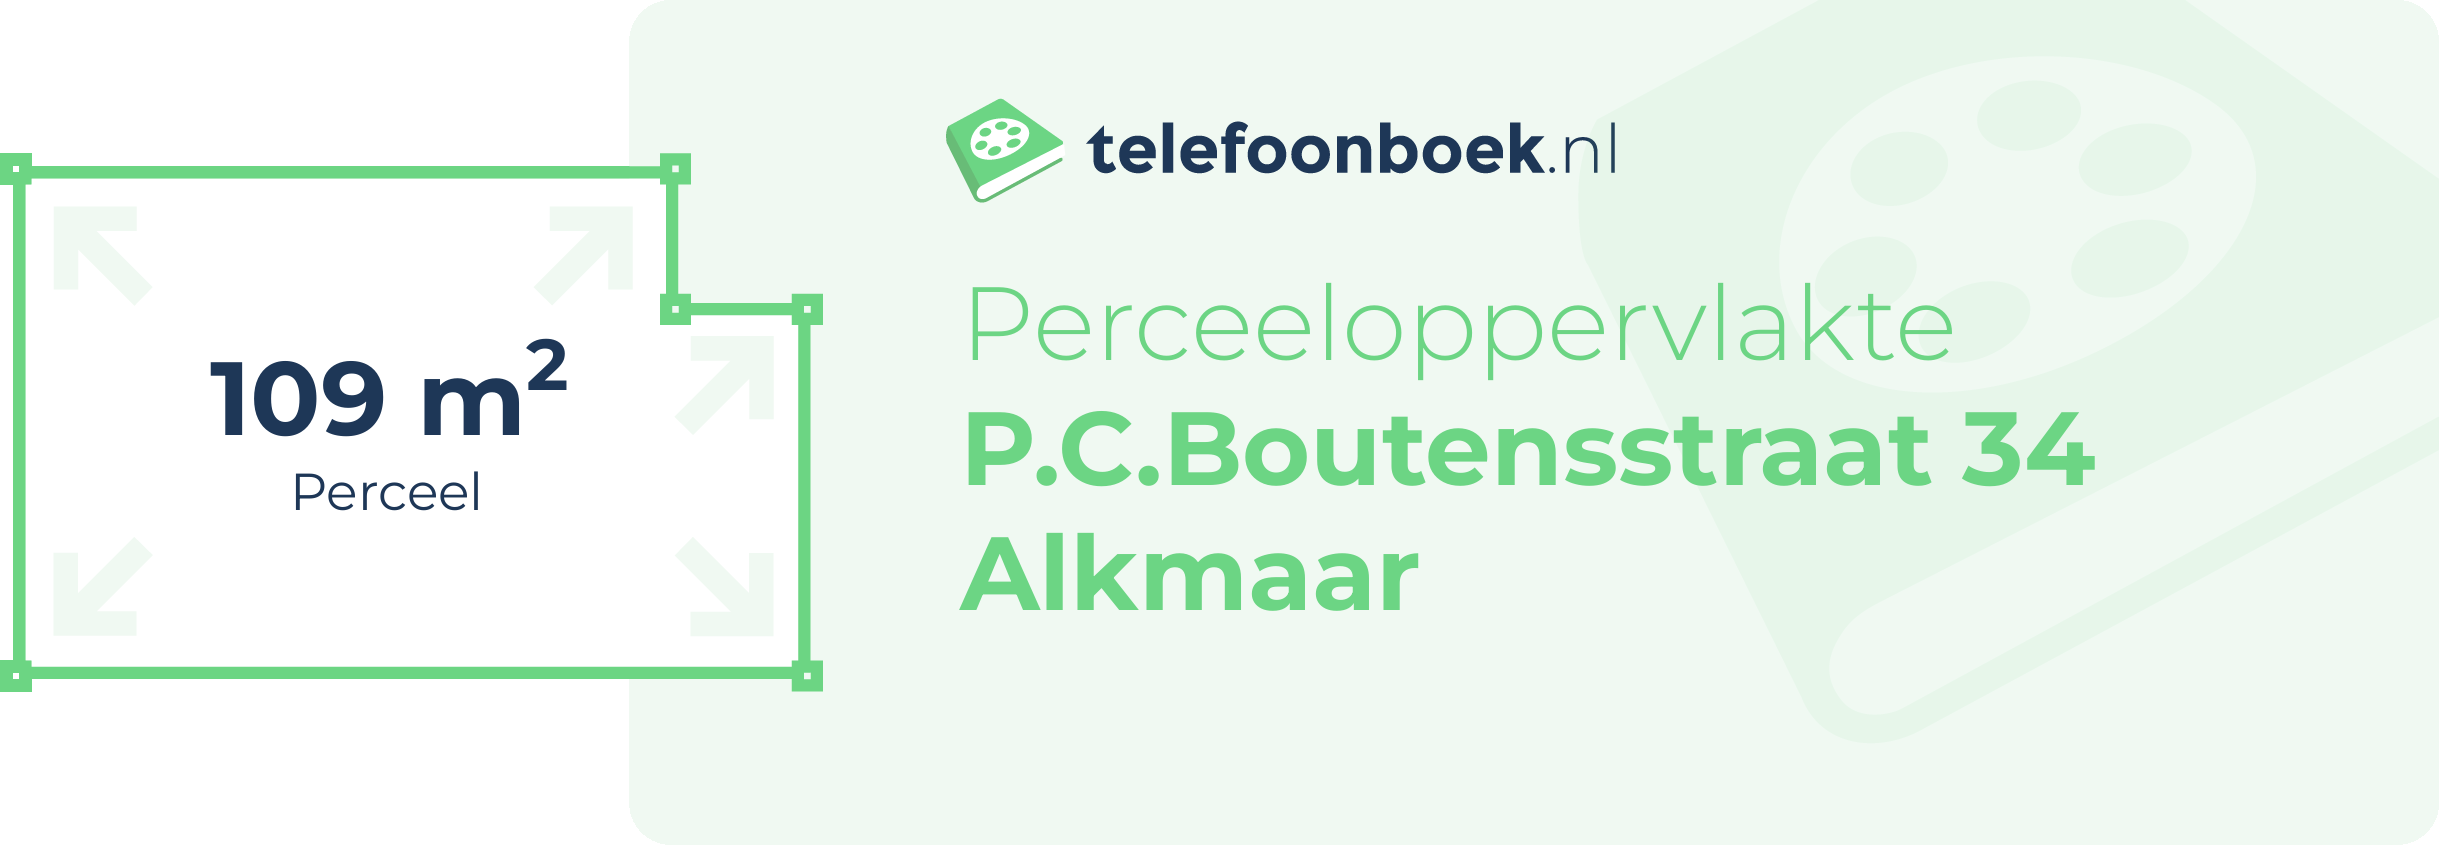 Perceeloppervlakte P.C.Boutensstraat 34 Alkmaar